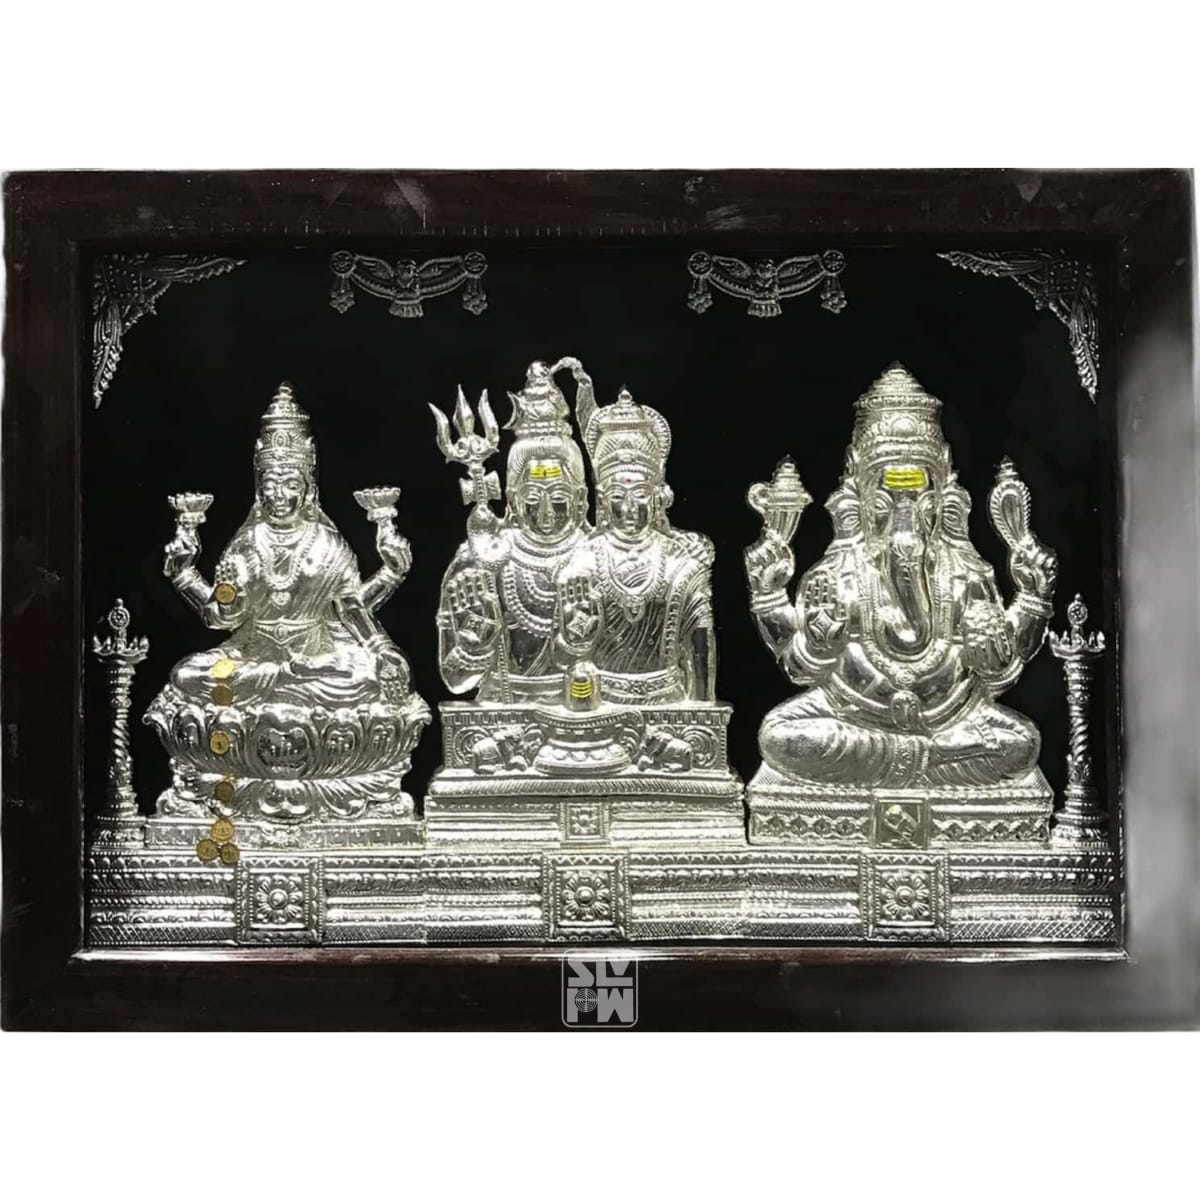 Buy 19x28 Lakshmi Eshwara Parwati Ganesha Online | Photo Galleria ...